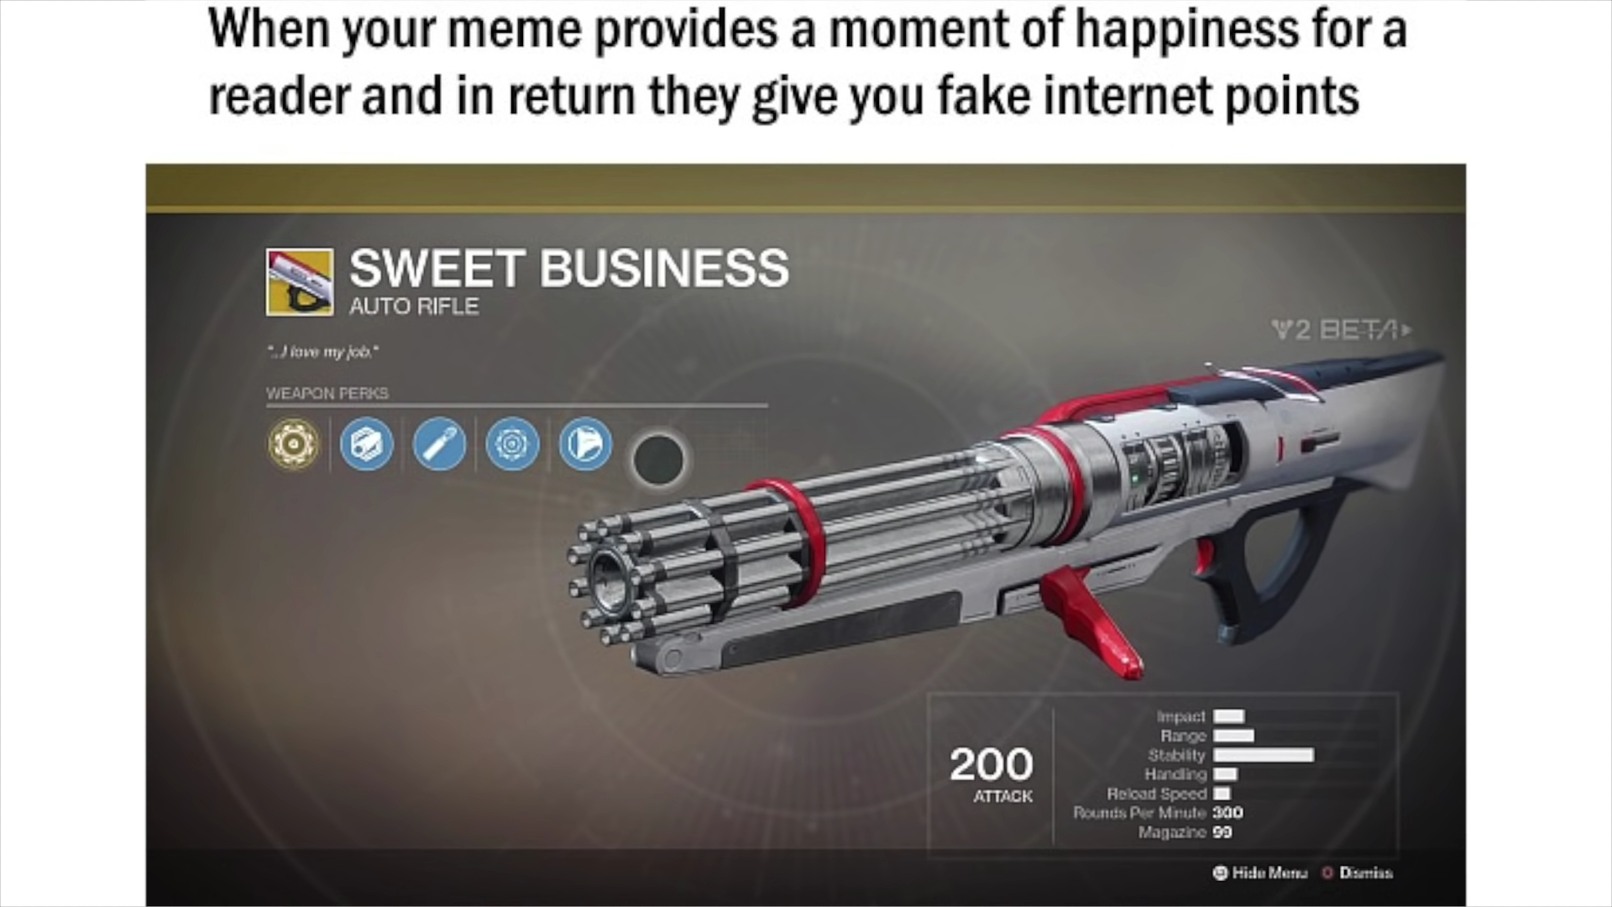 Sweet business - meme